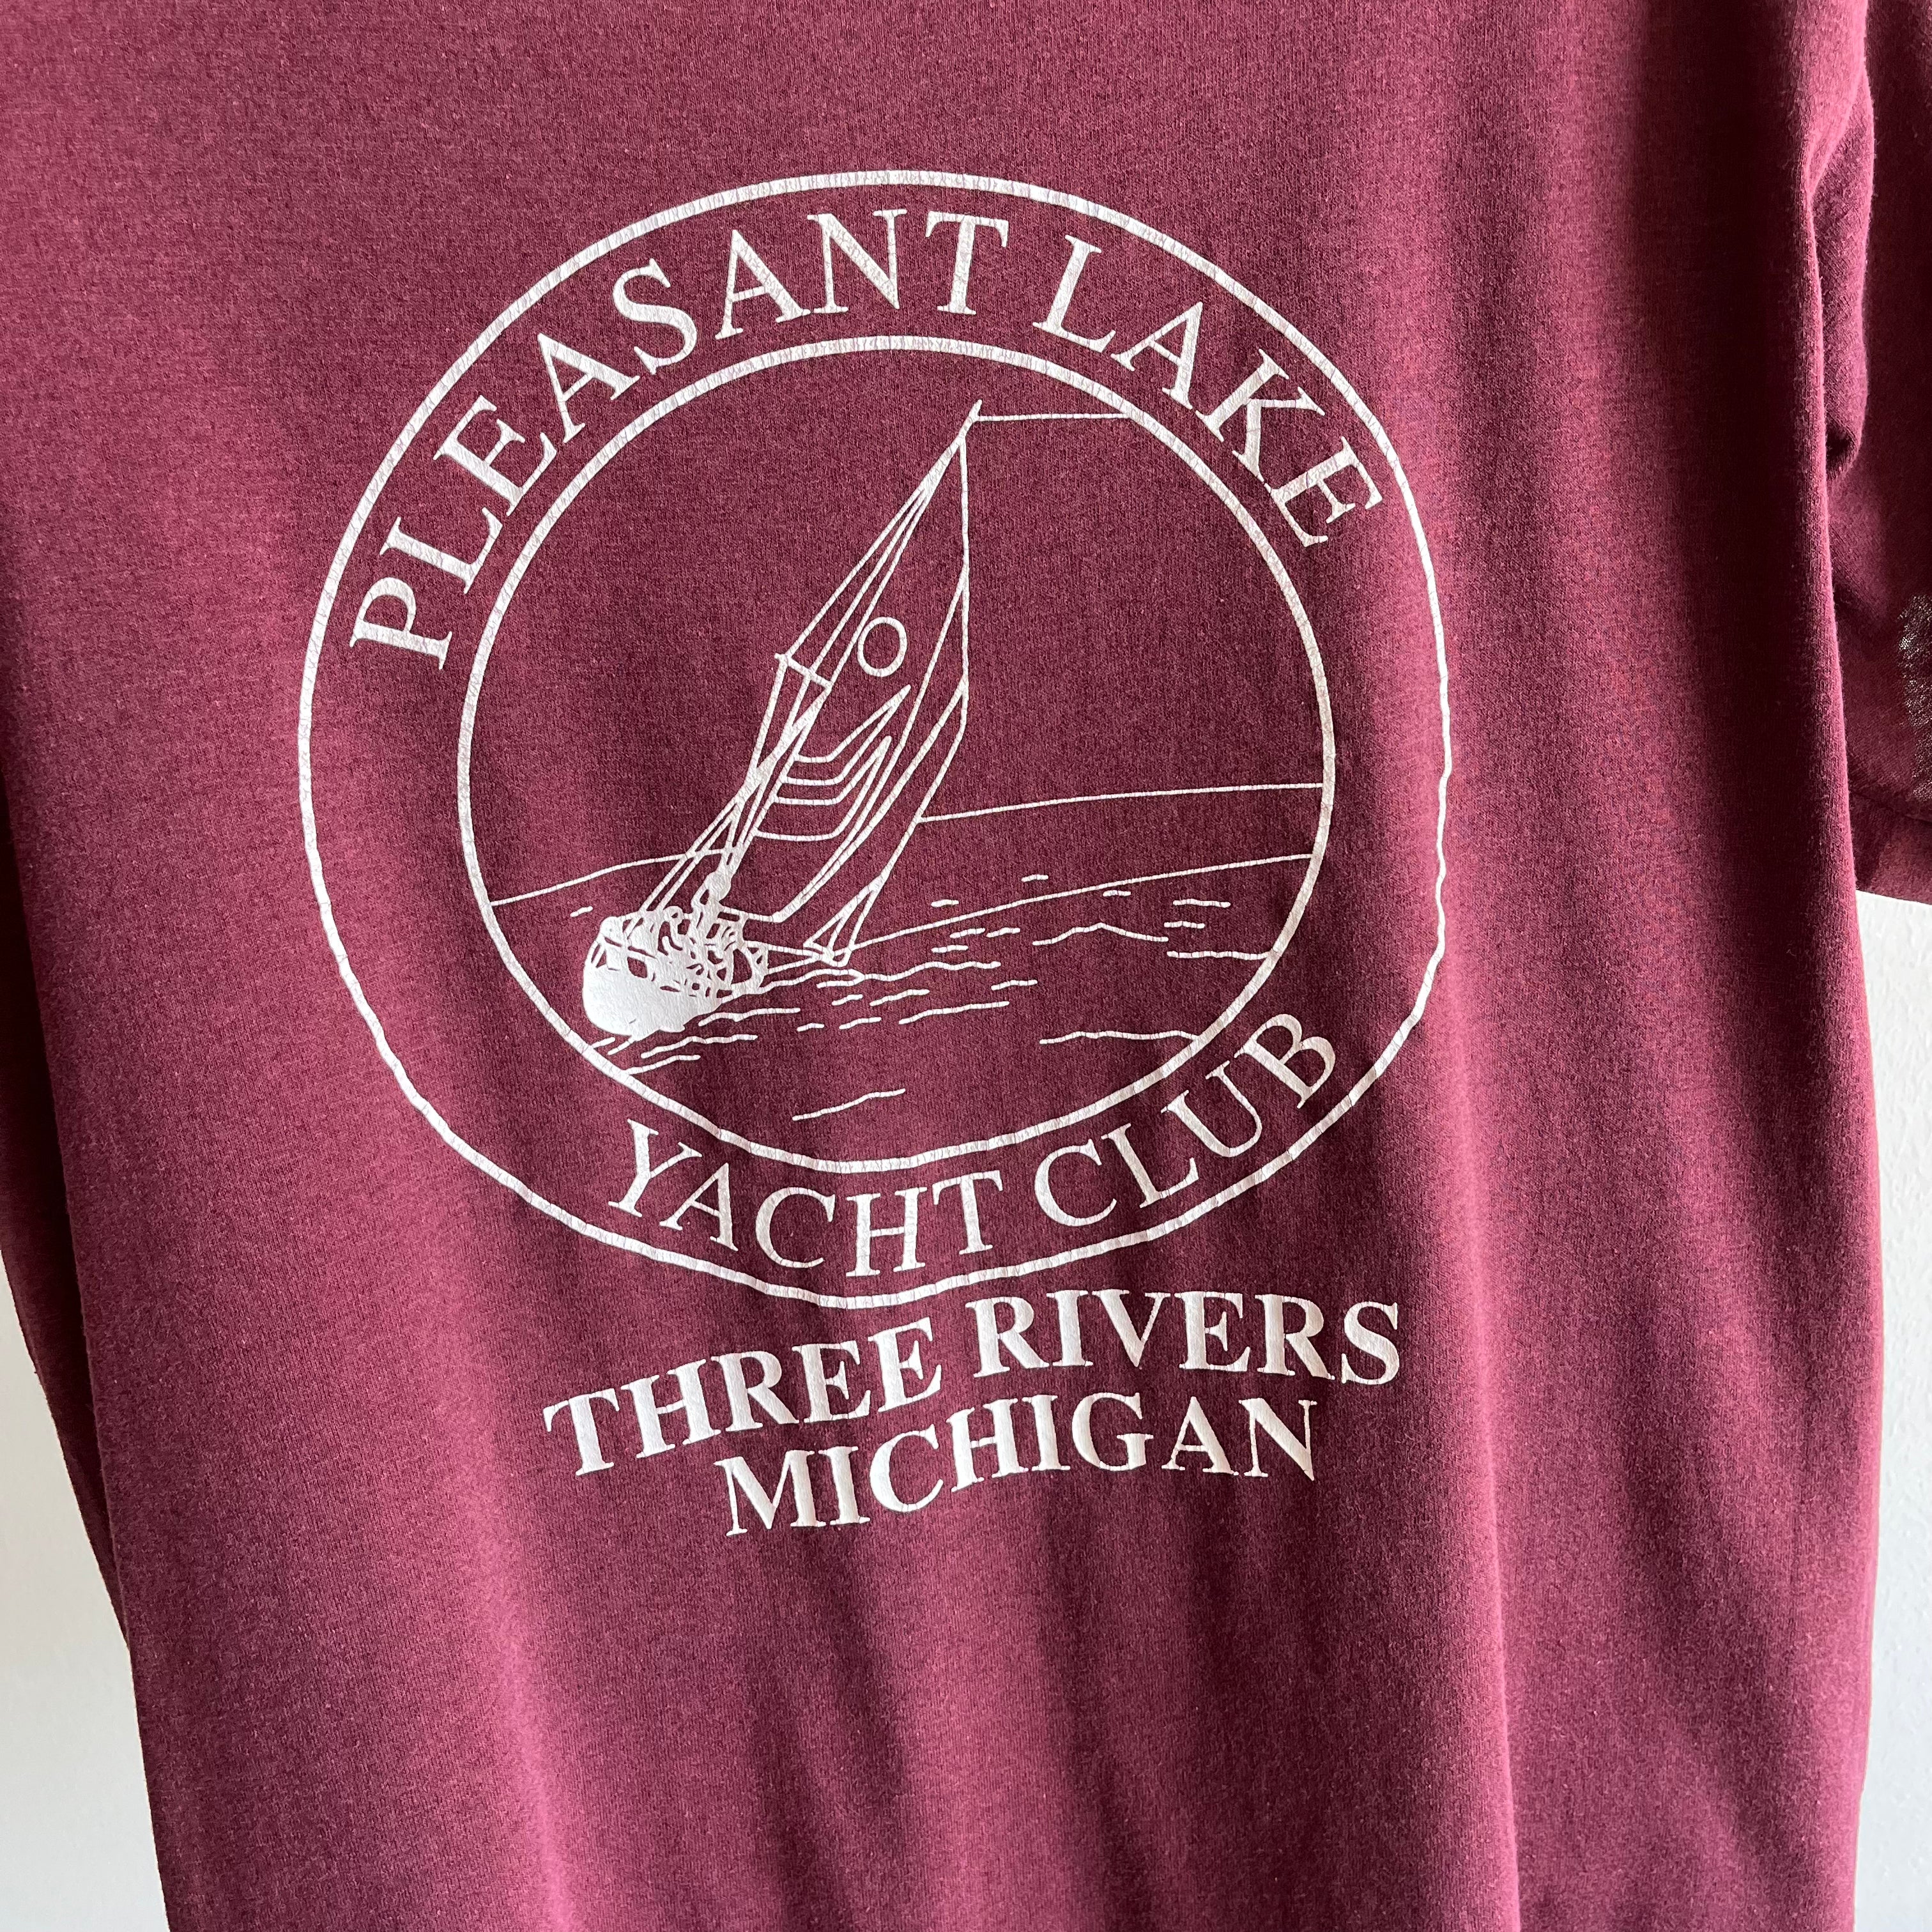 1980s Pleasant Lake Yacht Club, Three Rivers Michigan T-Shirt